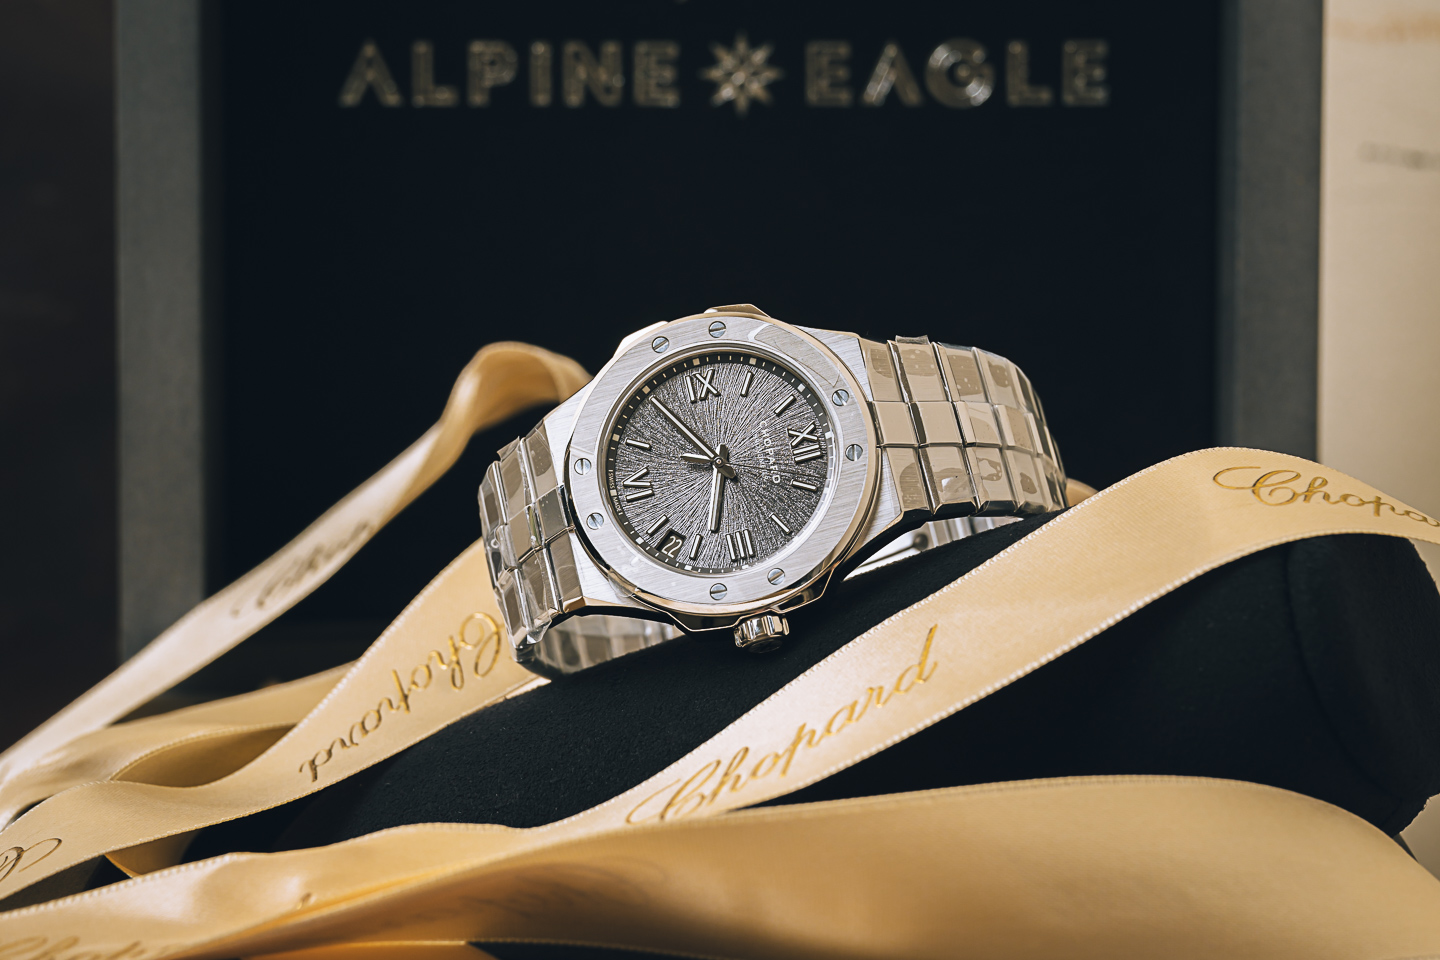 swiss watch online buying experience chopard alpine eagle abtw 1